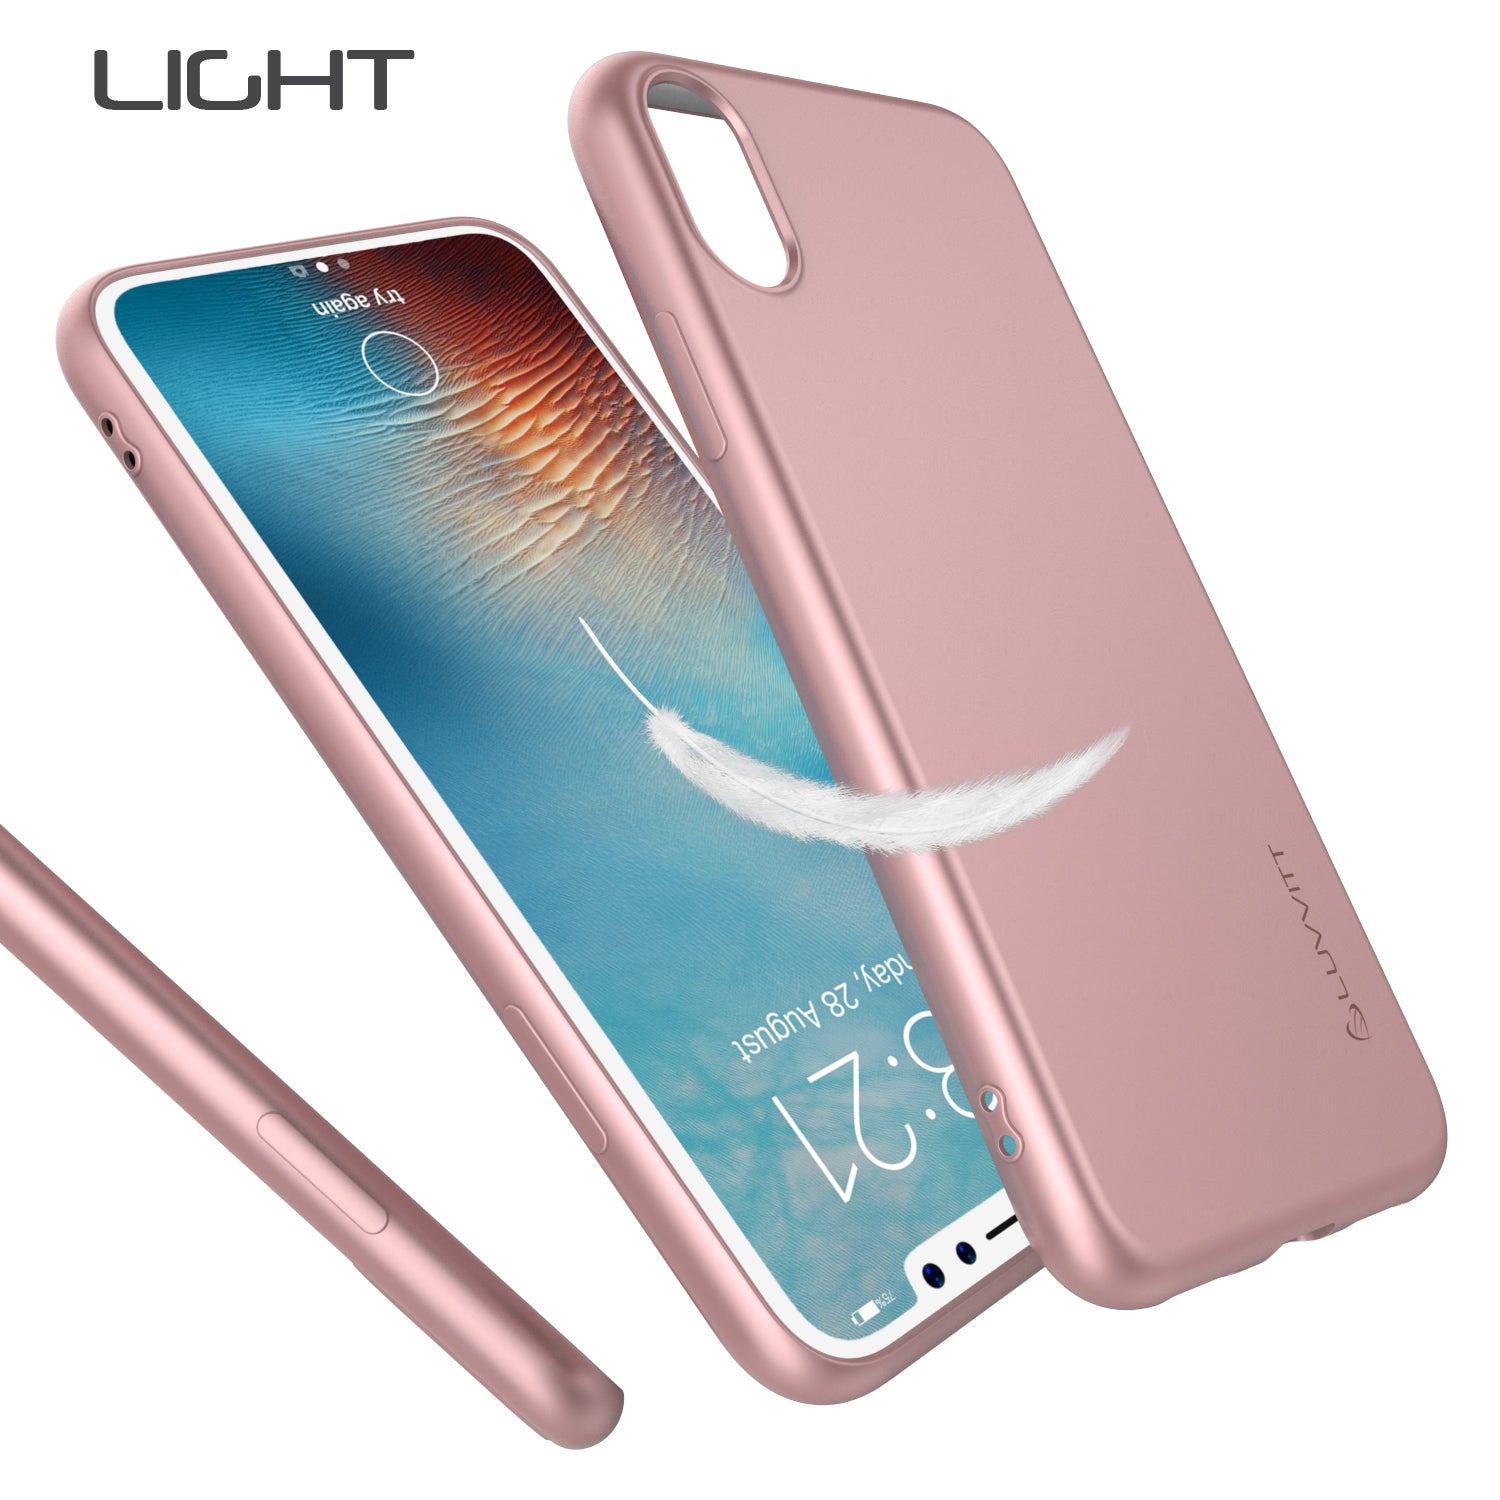 Luvvitt Ultra Slim Case for iPhone X Flexible Soft Feel TPU Cover - Rose Gold